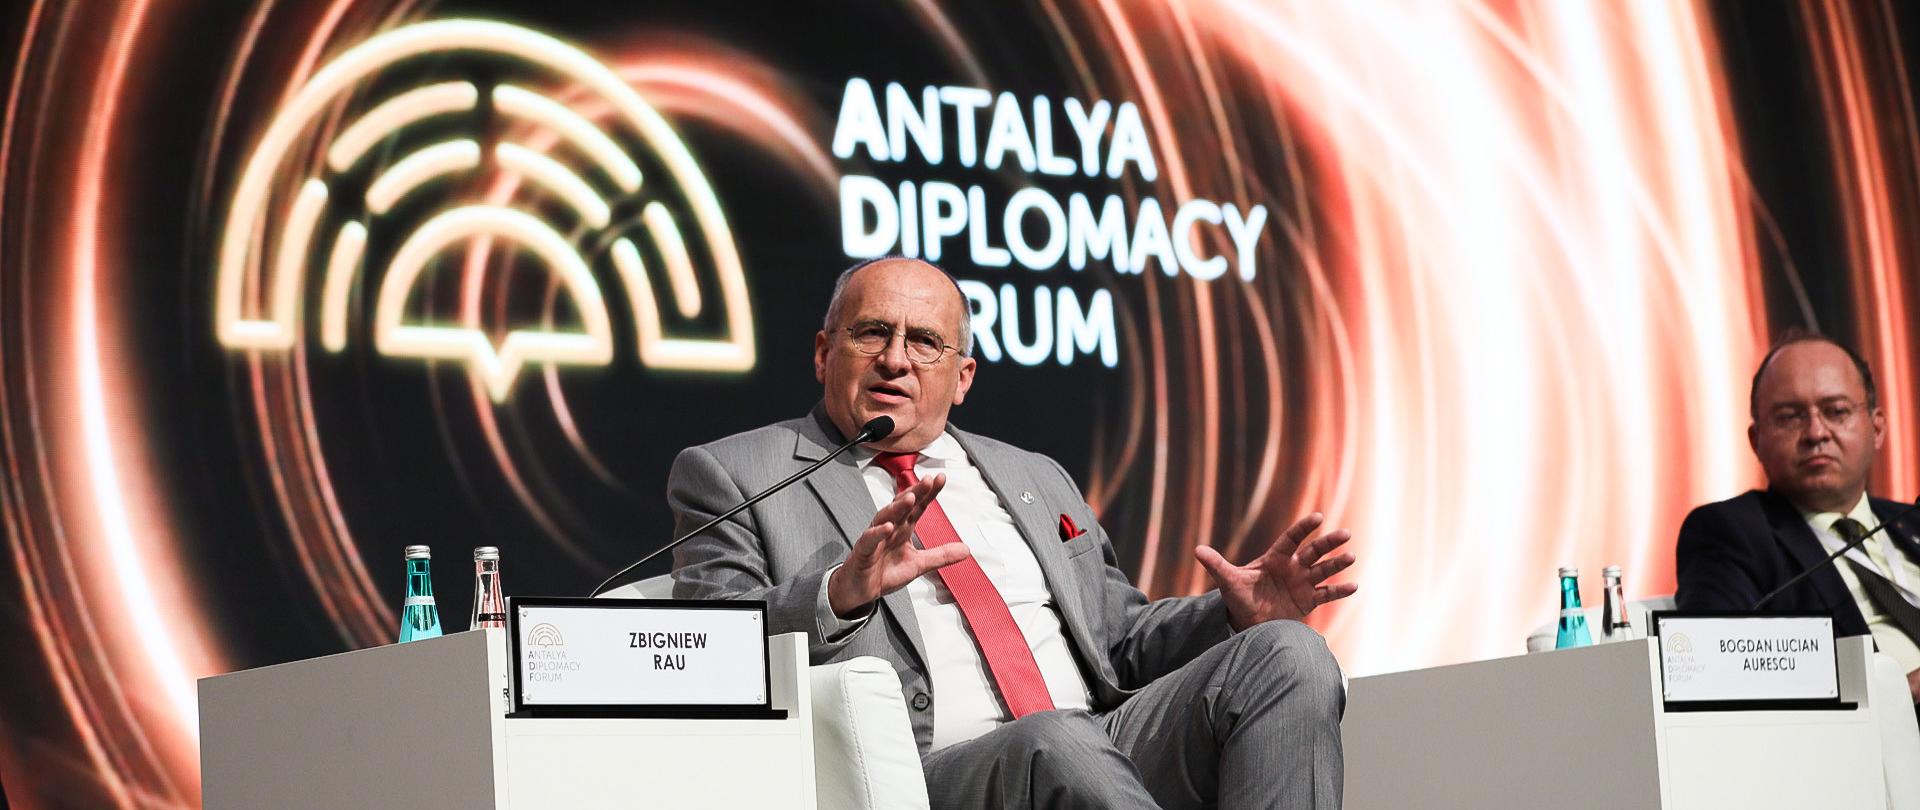 Minister Zbigniew Rau attends Antalya Diplomacy Forum